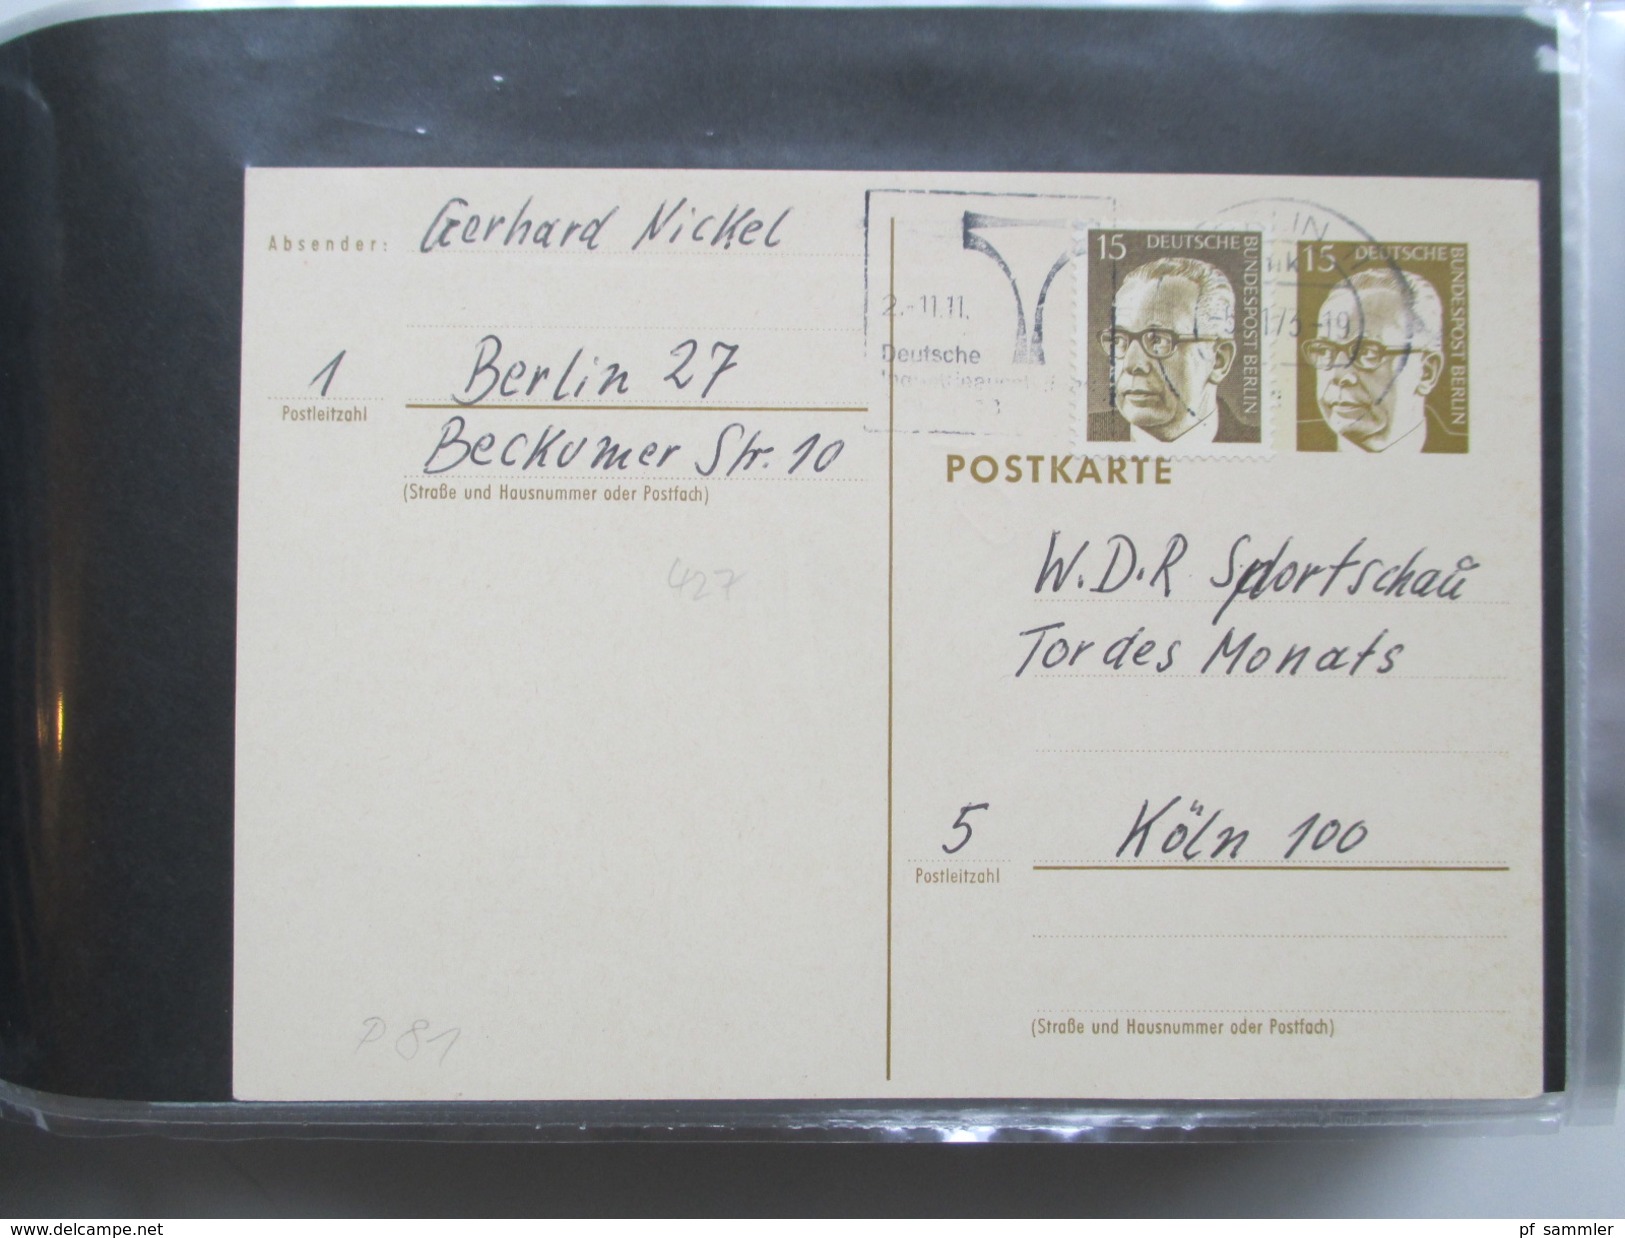 Berlin Belegesammlung 100 Briefe.Bedarf / FDC 1972-1975. Interessante Stücke / Stöberposten! Bund / Berlin Stempel. ATM